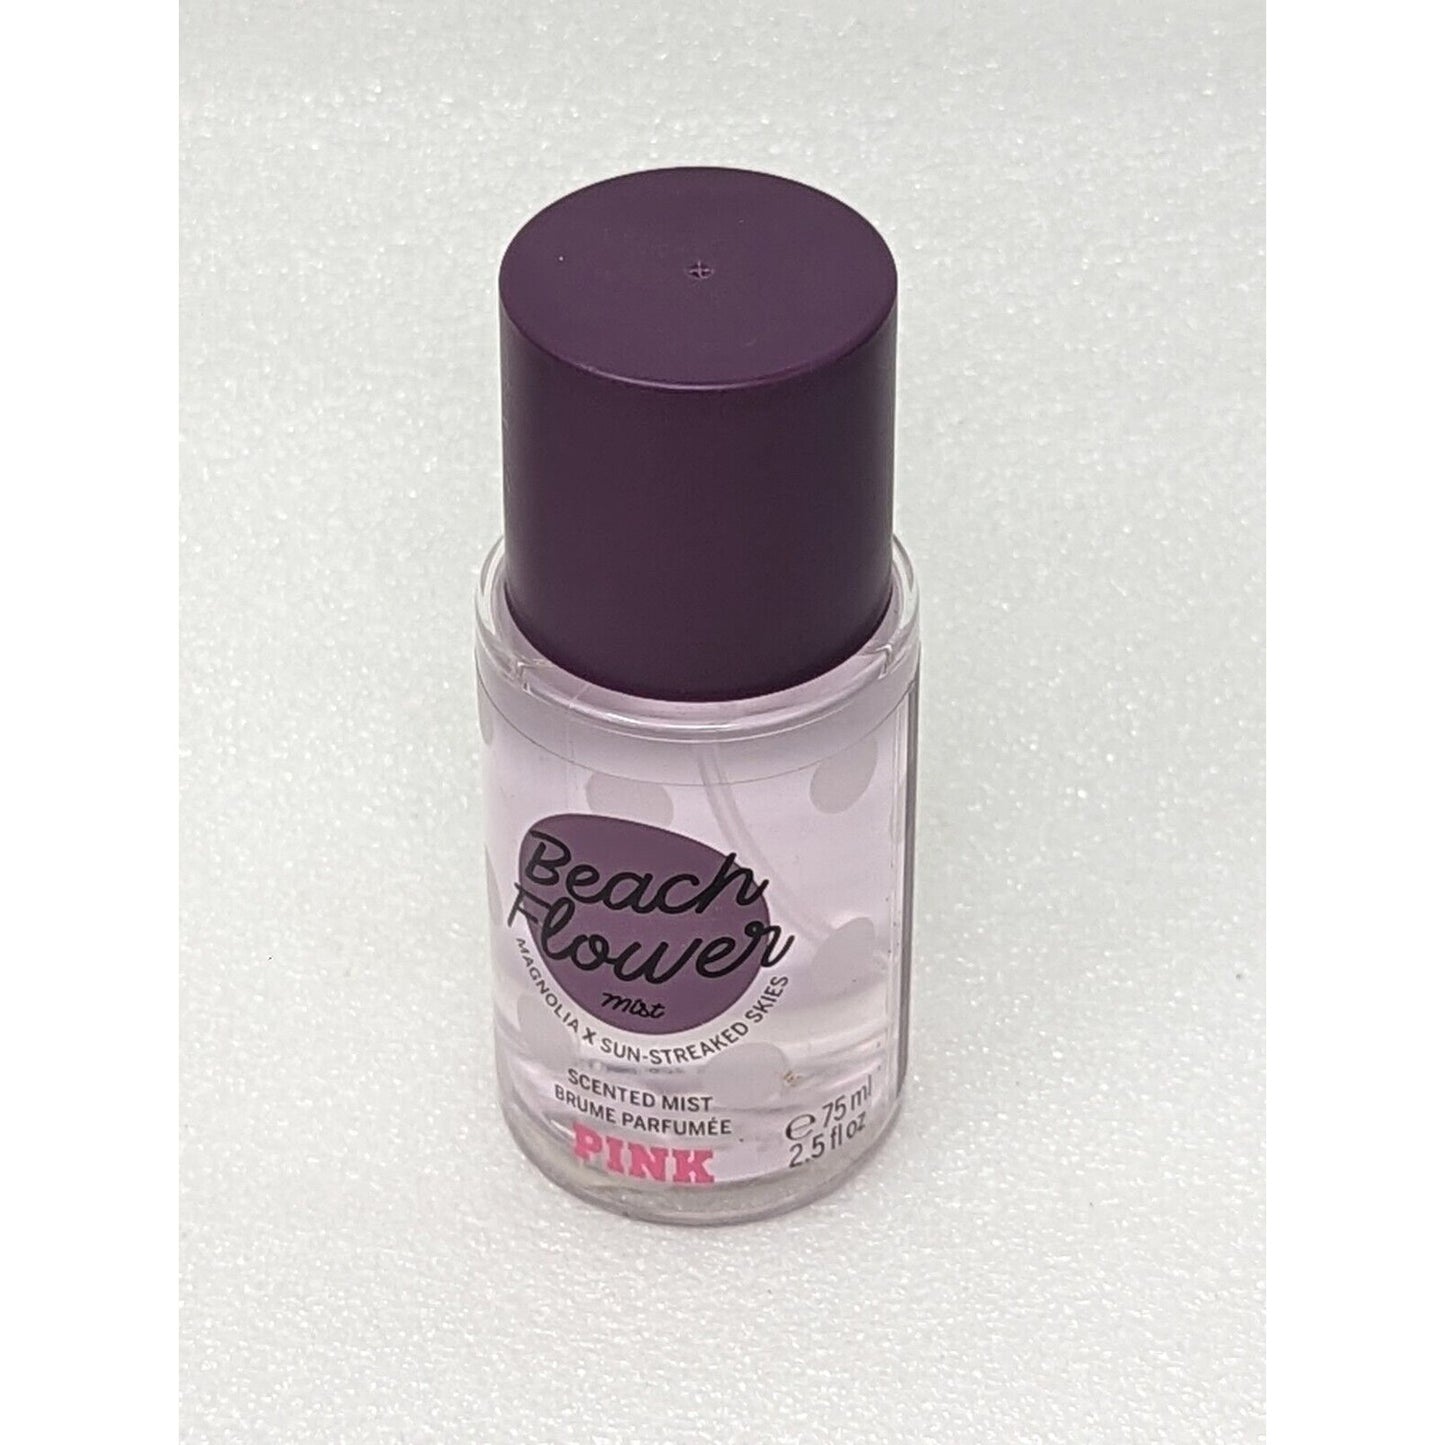 Victoria's Secret Pink Beach Flower Body Fragrance Mist Spray 2.5 Oz Travel Size